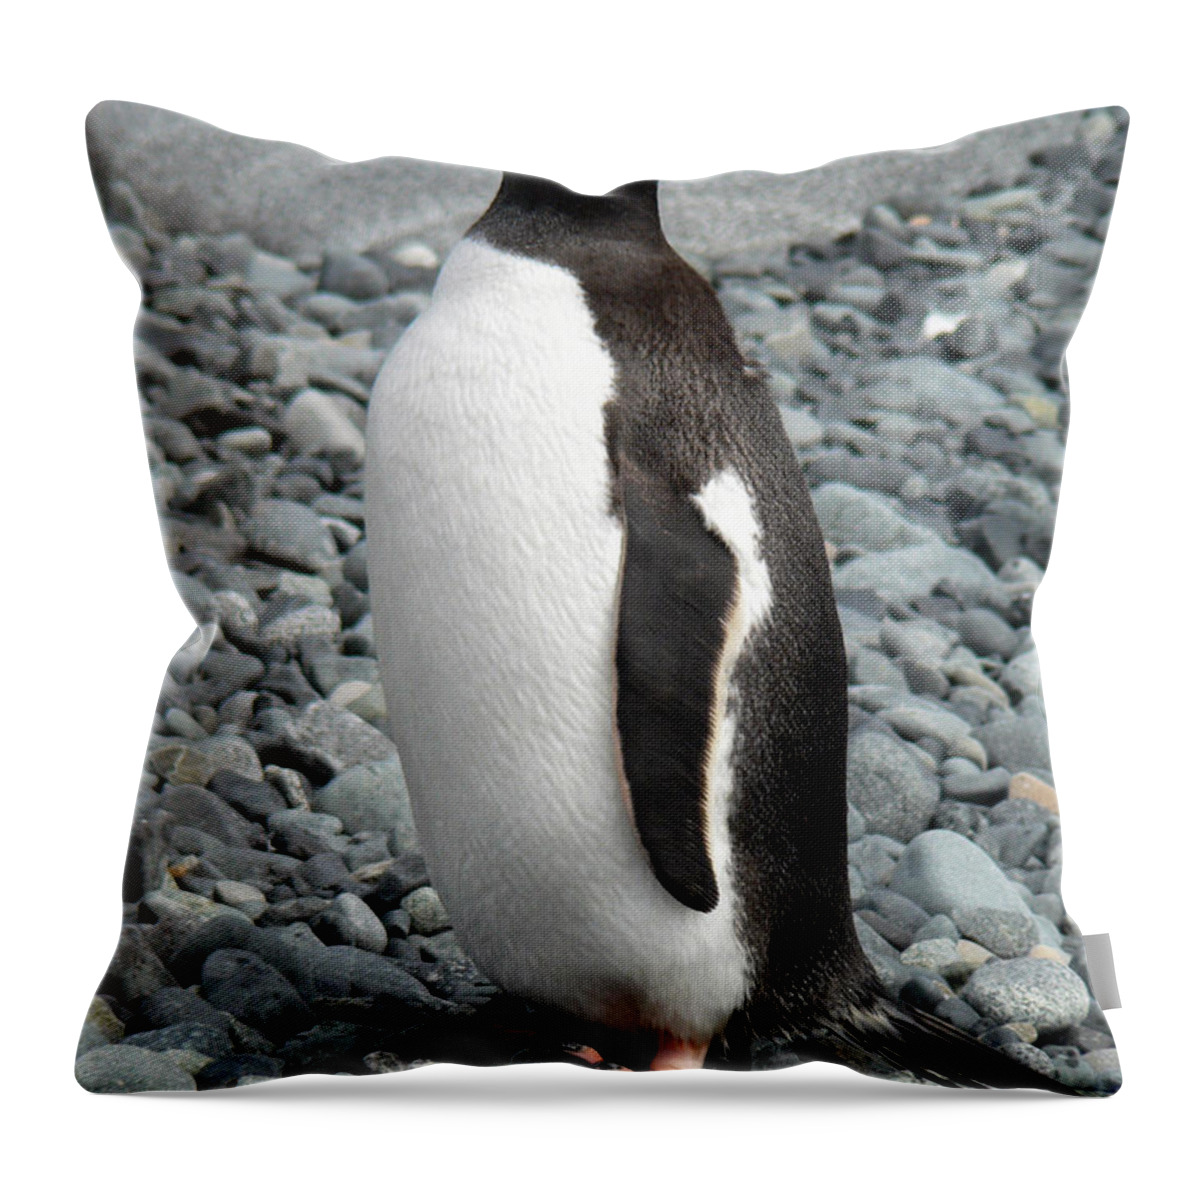 Animal Themes Throw Pillow featuring the photograph Antarctica Half Moon Bay Gentoo Penguin by Photo, David Curtis